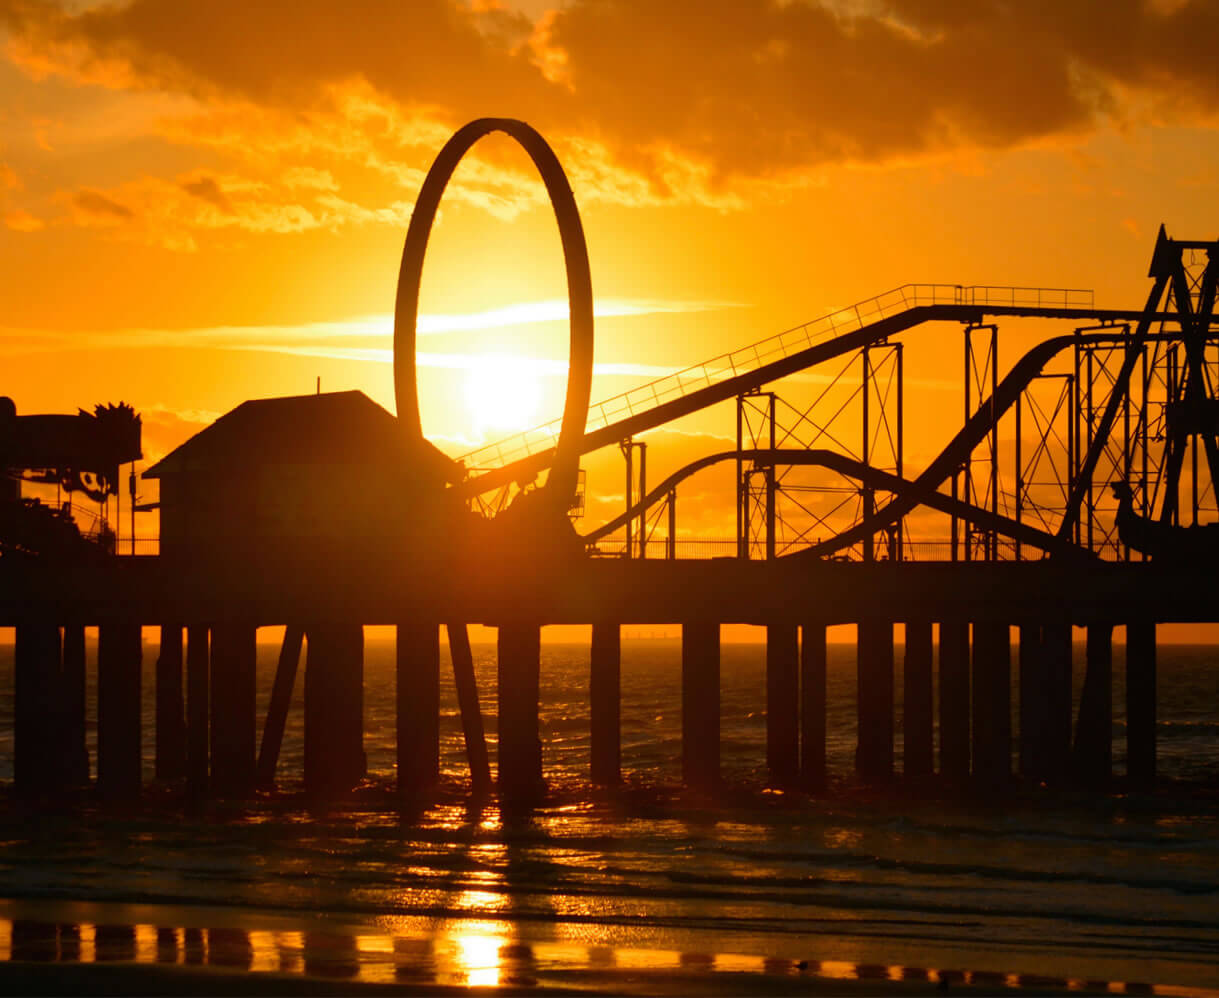 pleasure pier at sunset